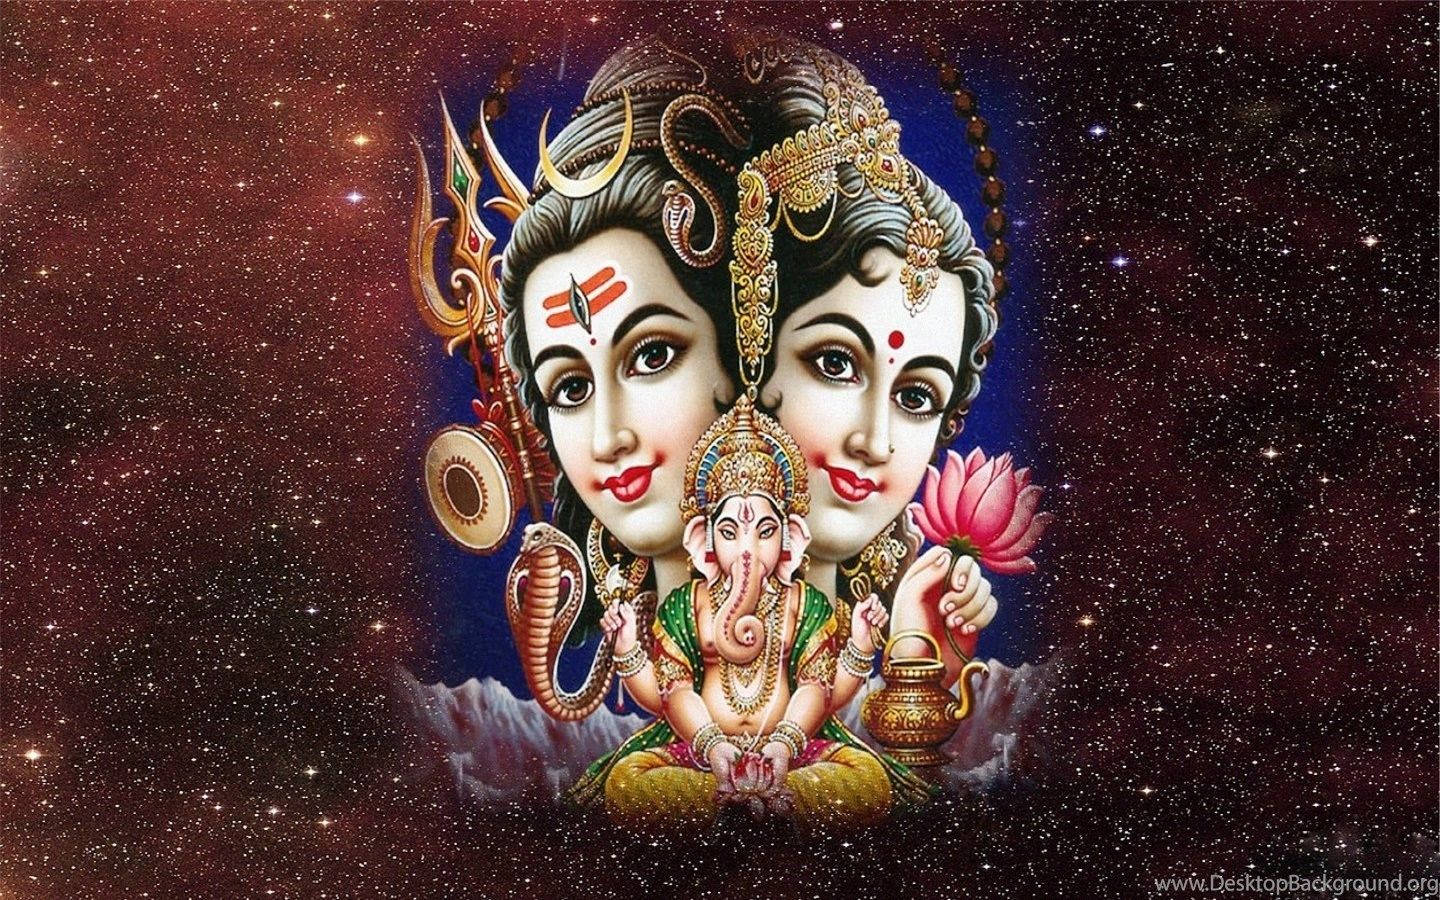 Ganesh 3d With Hindu Gods